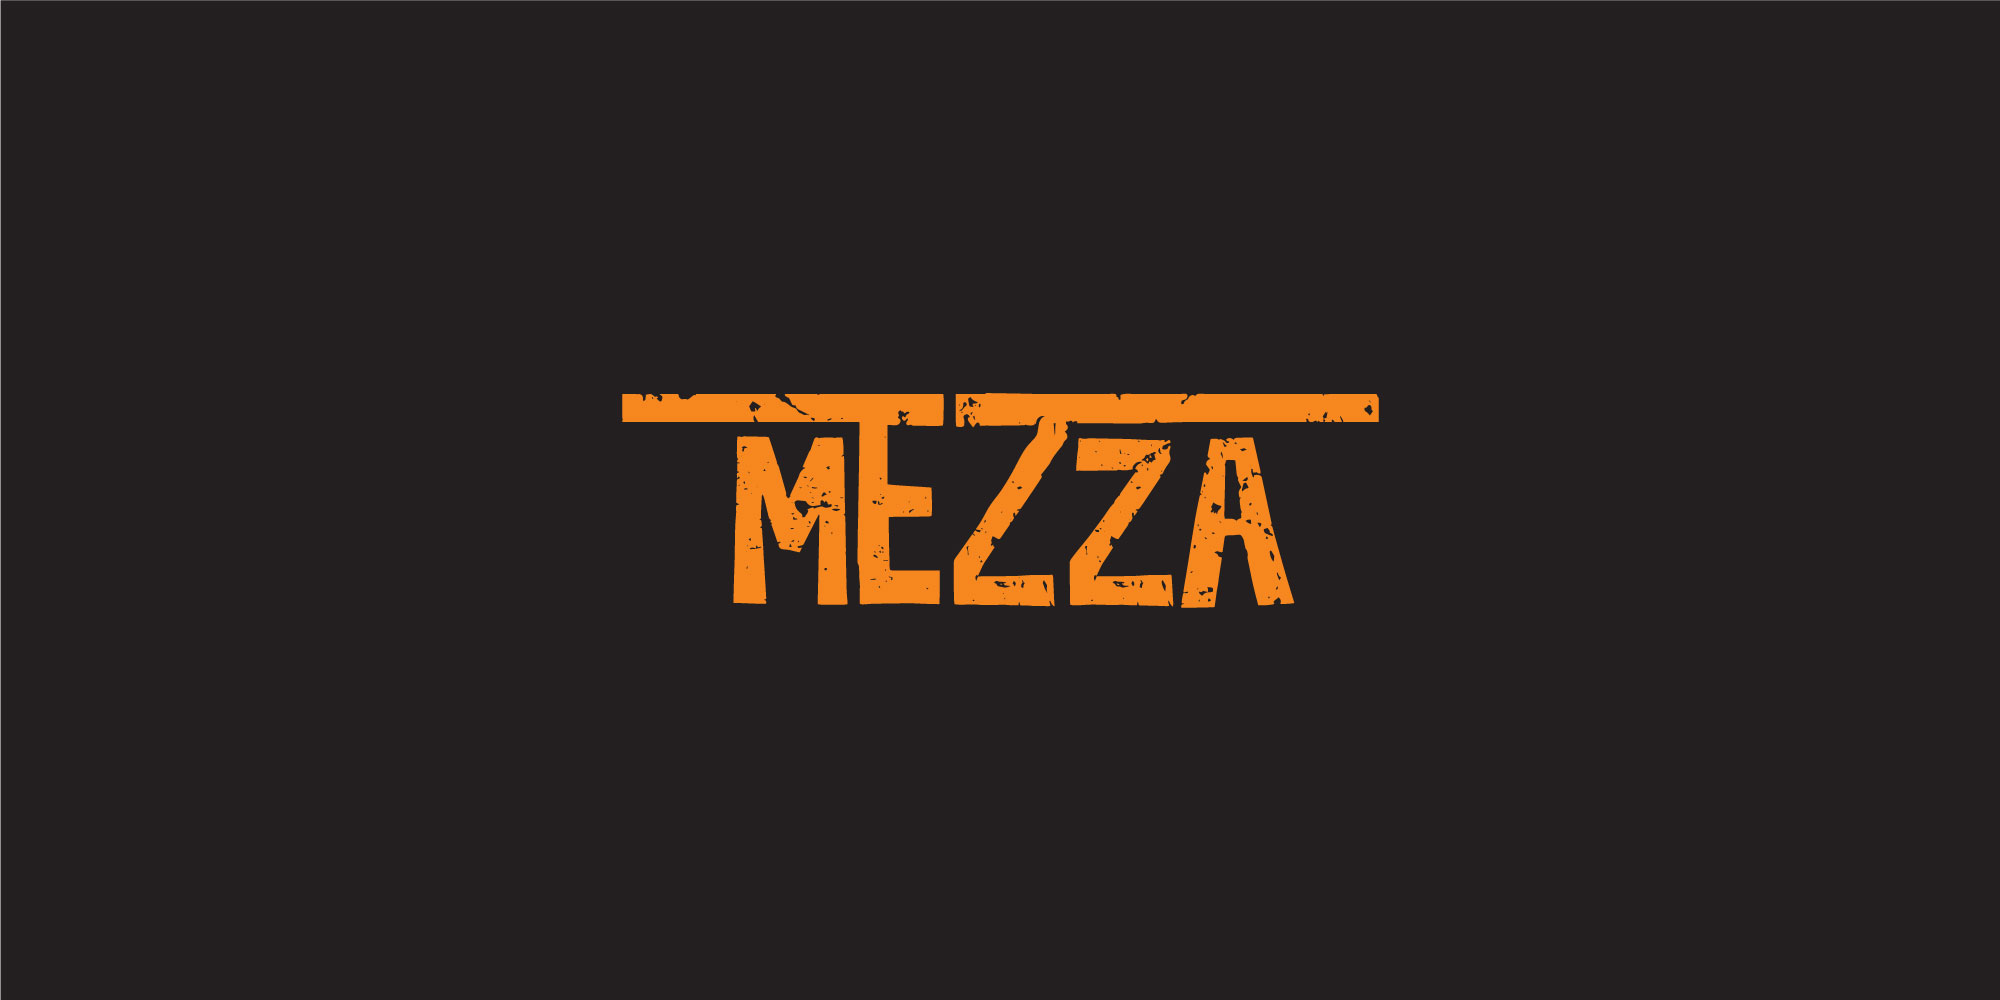 mezza logo design 4 orange logo on black bg